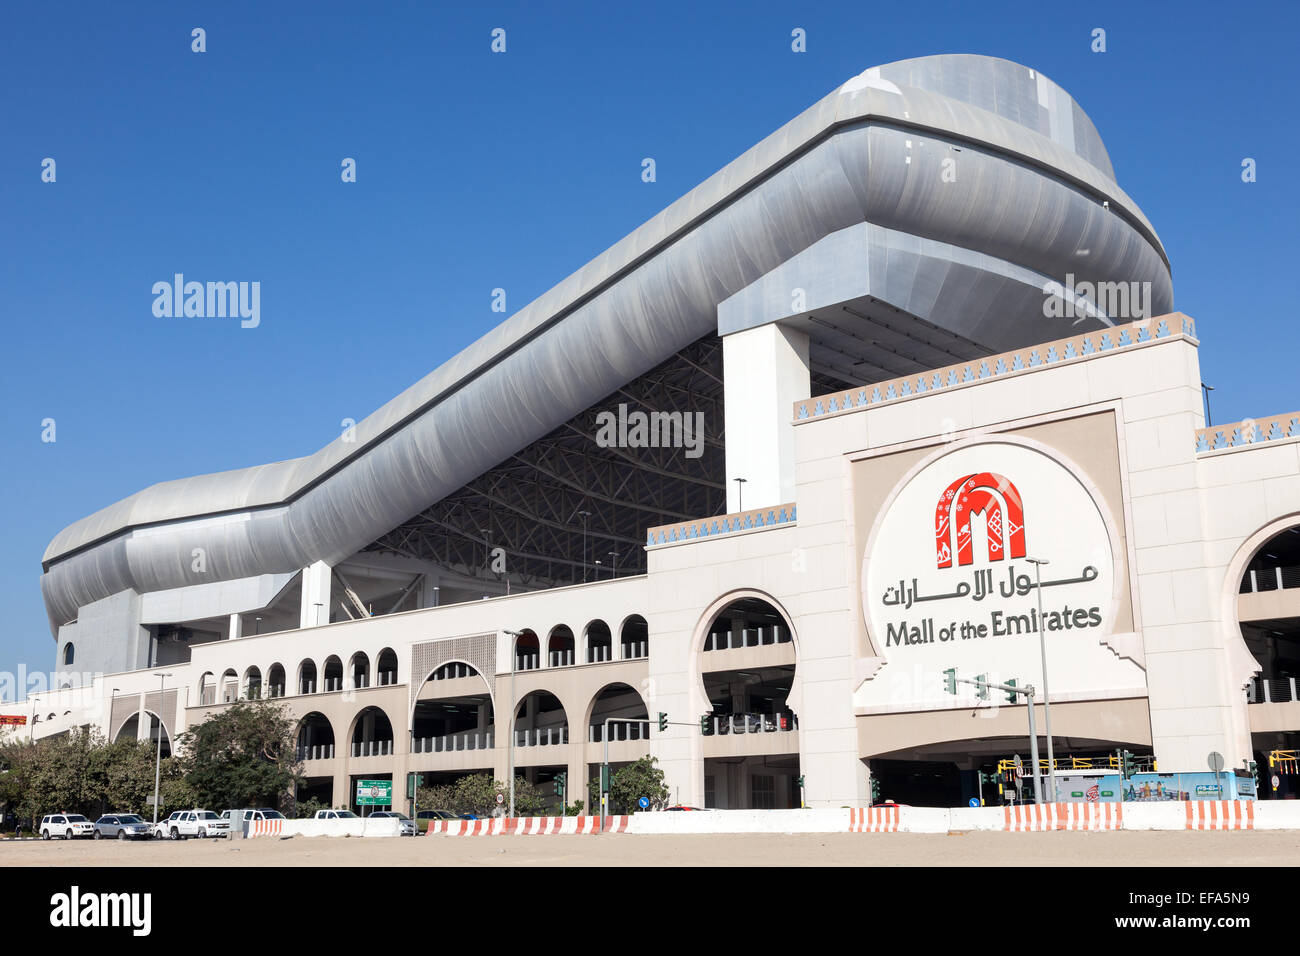 Mall of the Emirates in Dubai, United Arab Emirates Stock Photo